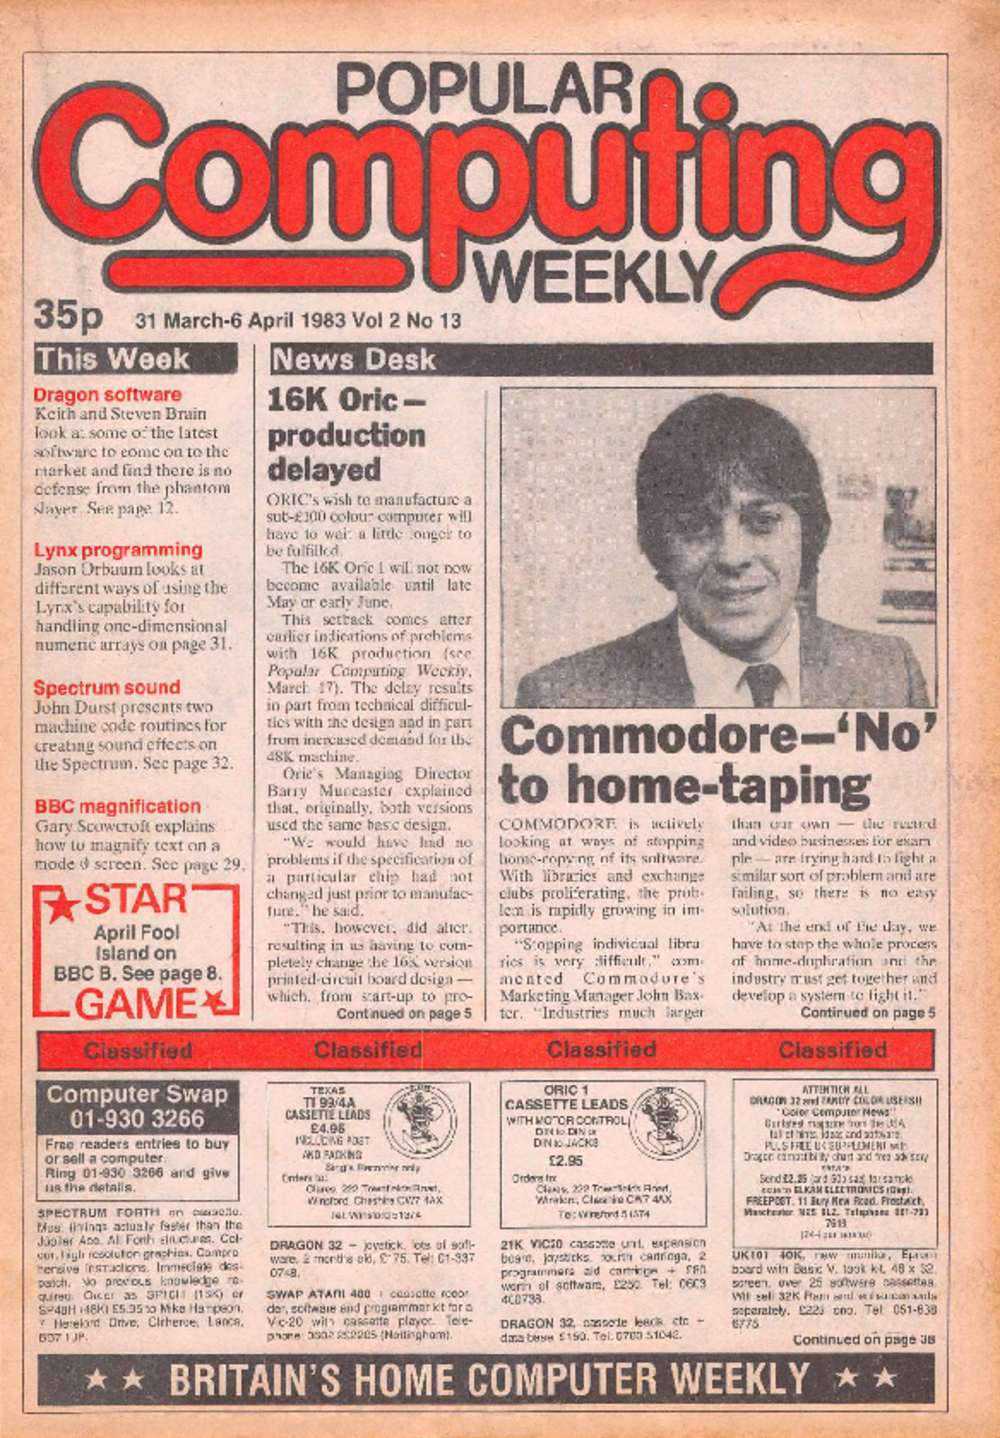 Article: Popular Computing Weekly Vol 2 No 13 - 31 March - 6 April 1983